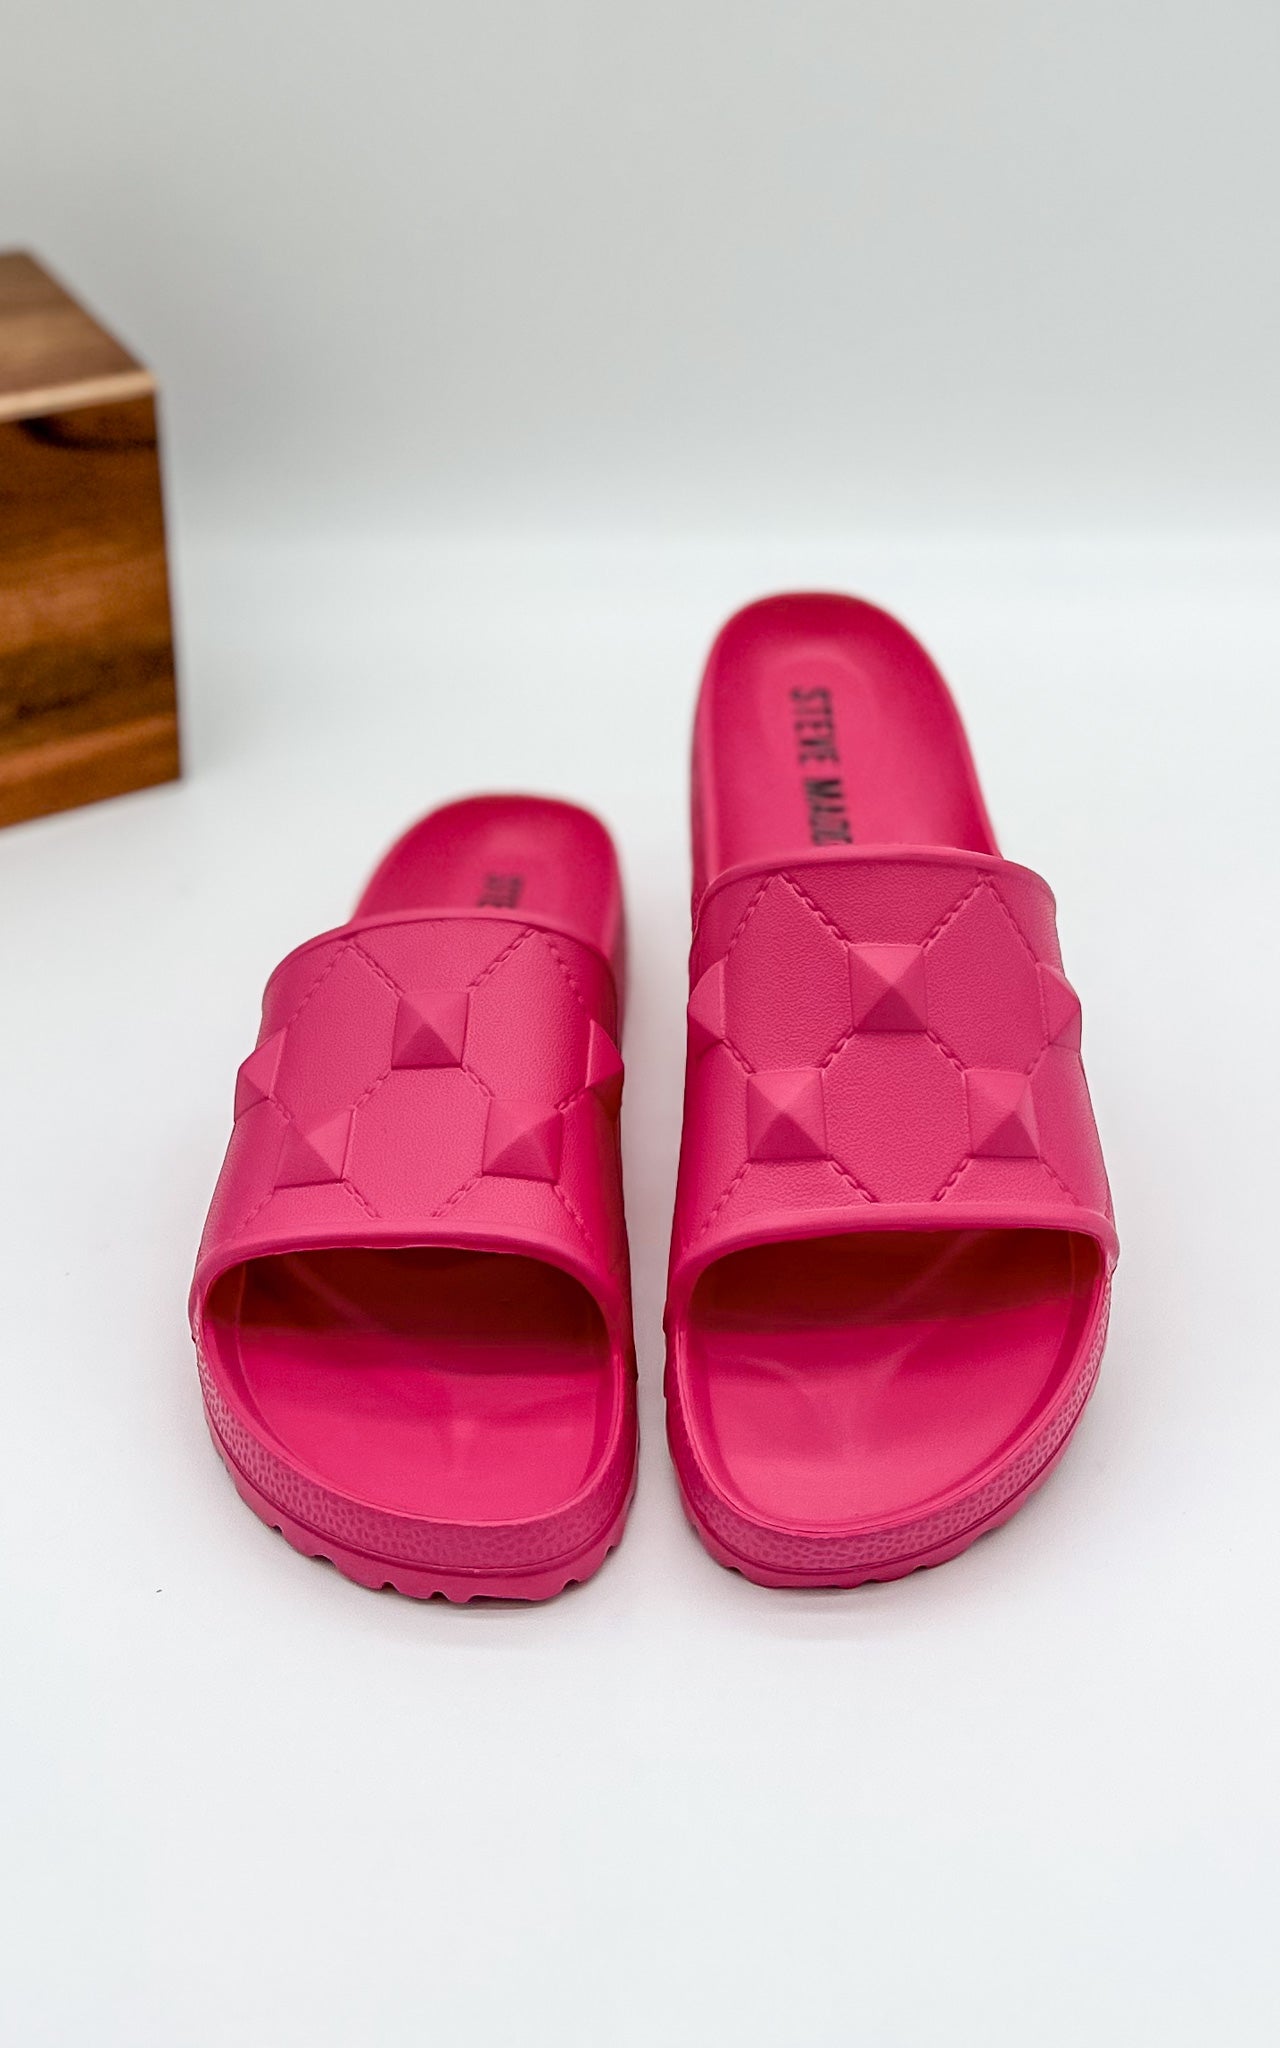 Steve Madden Gaby Sandals in Pink